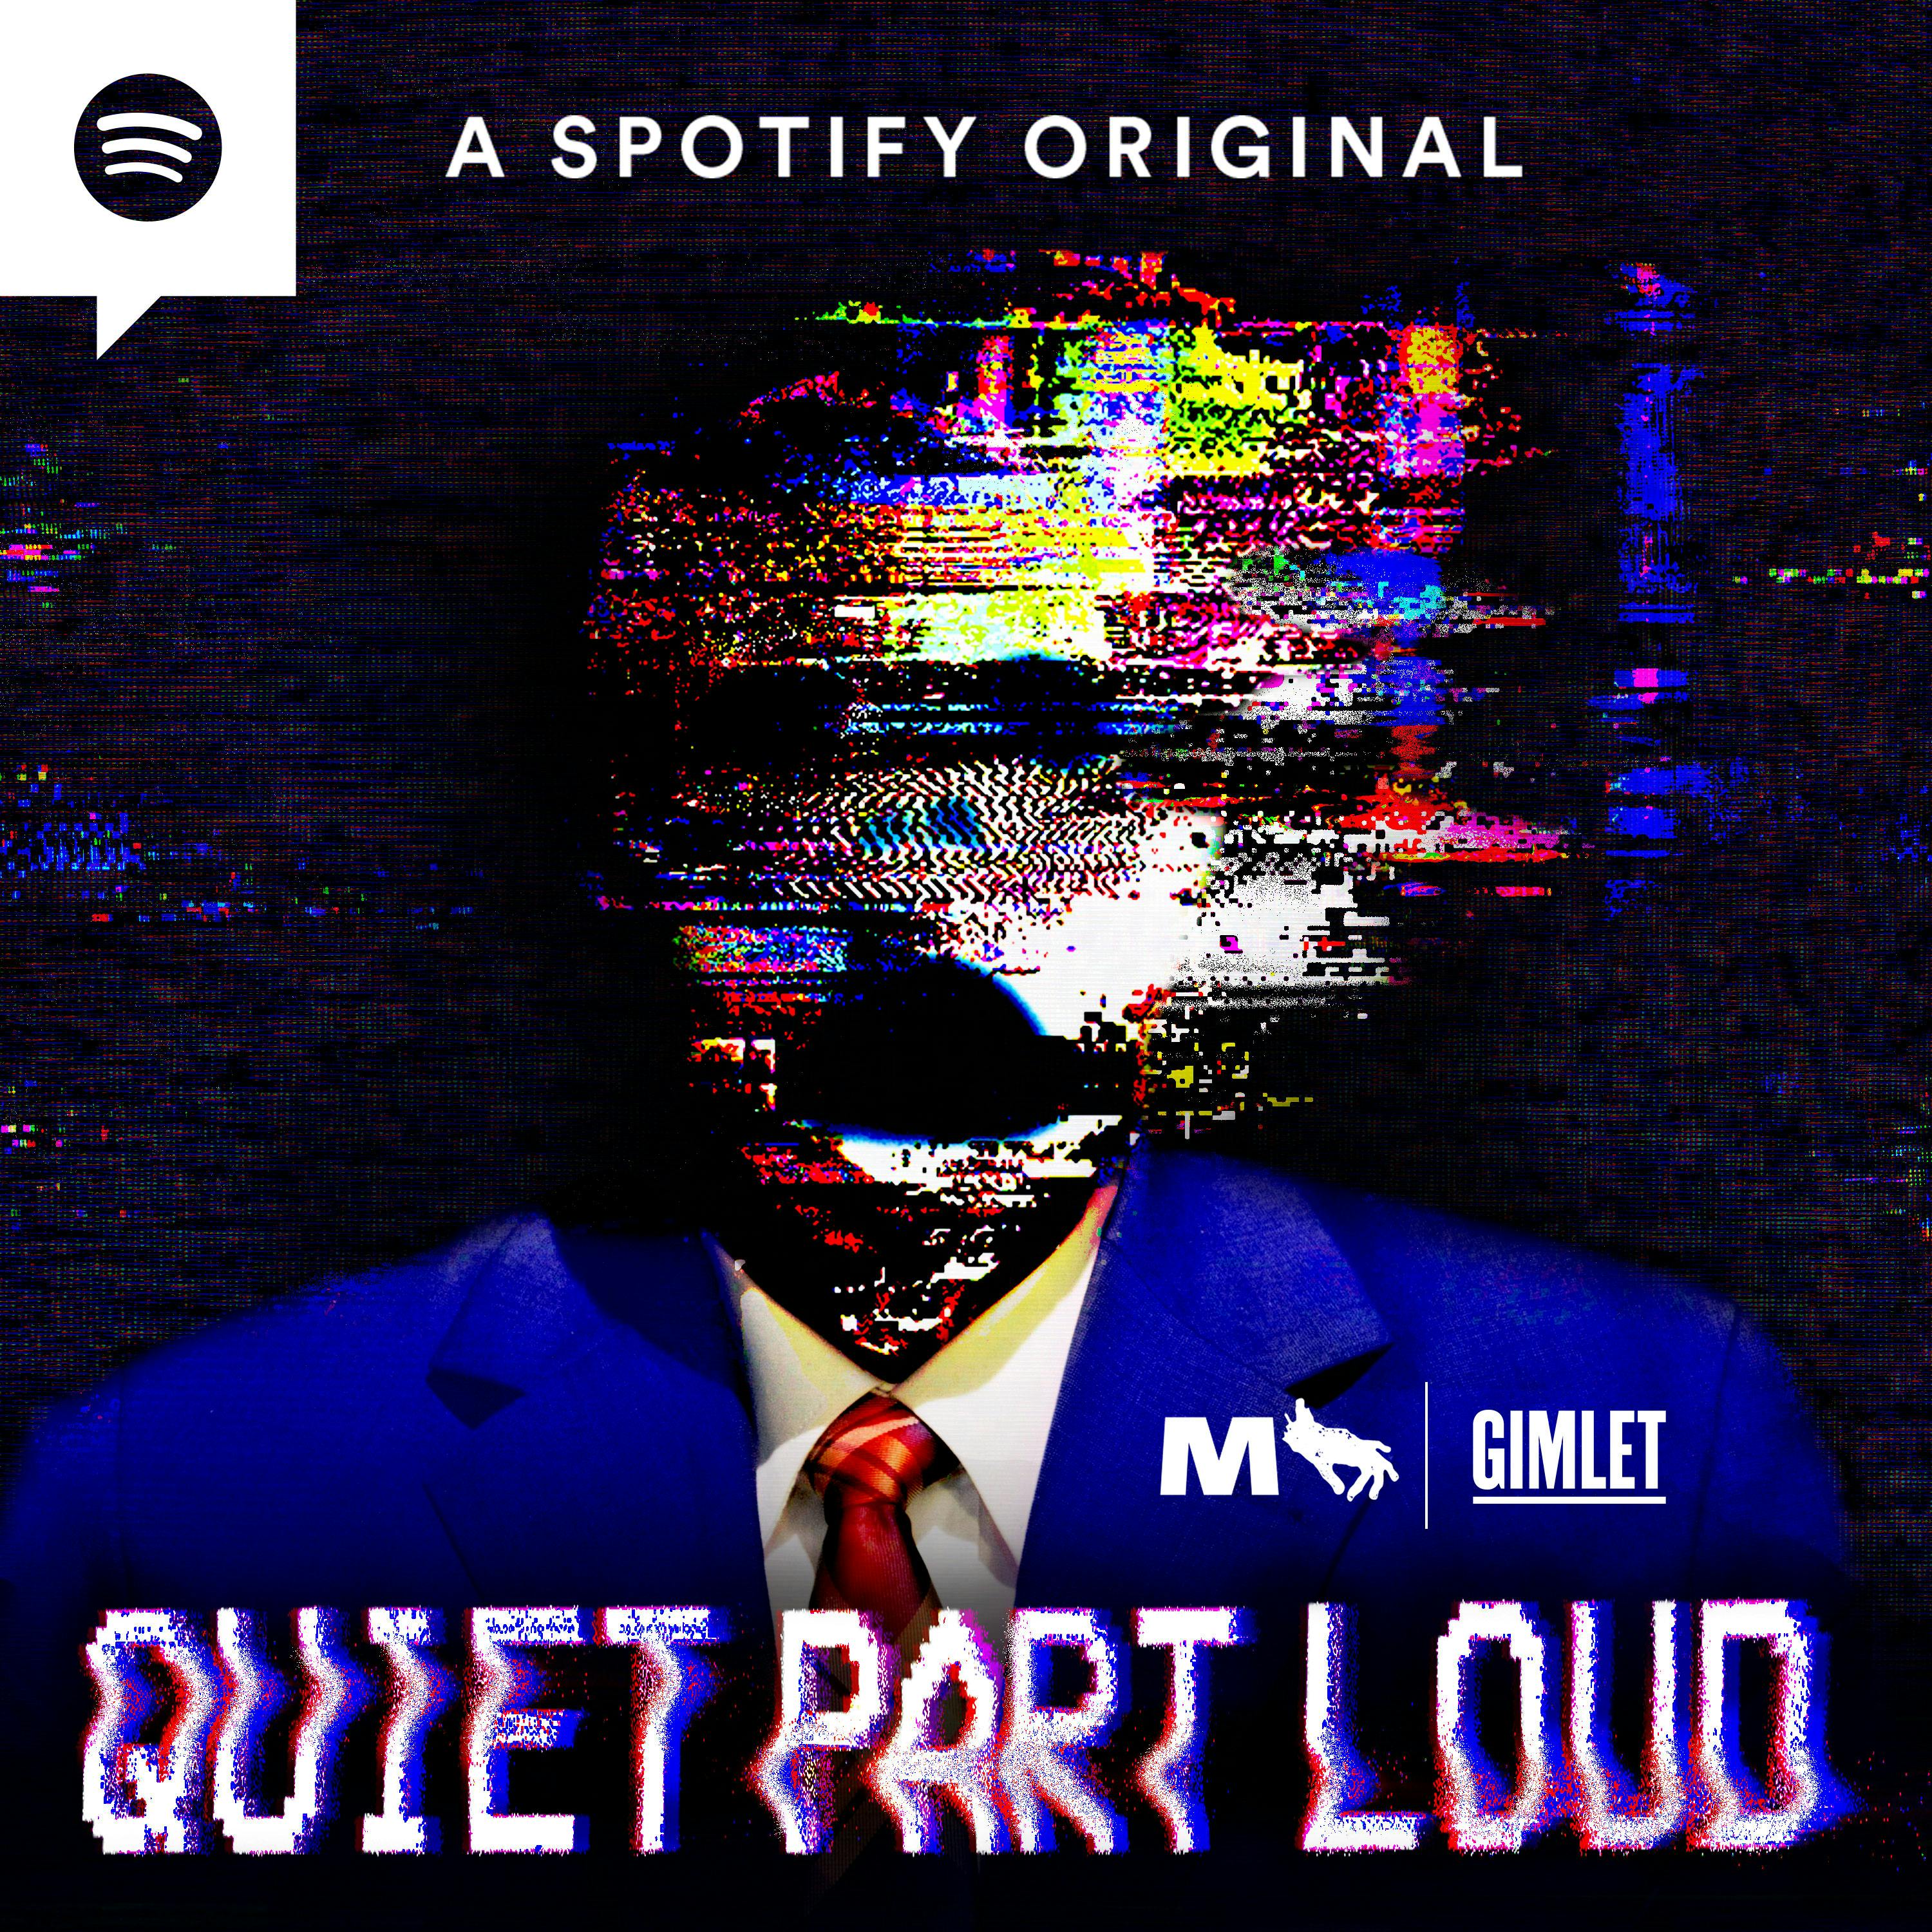 Introducing Quiet Part Loud